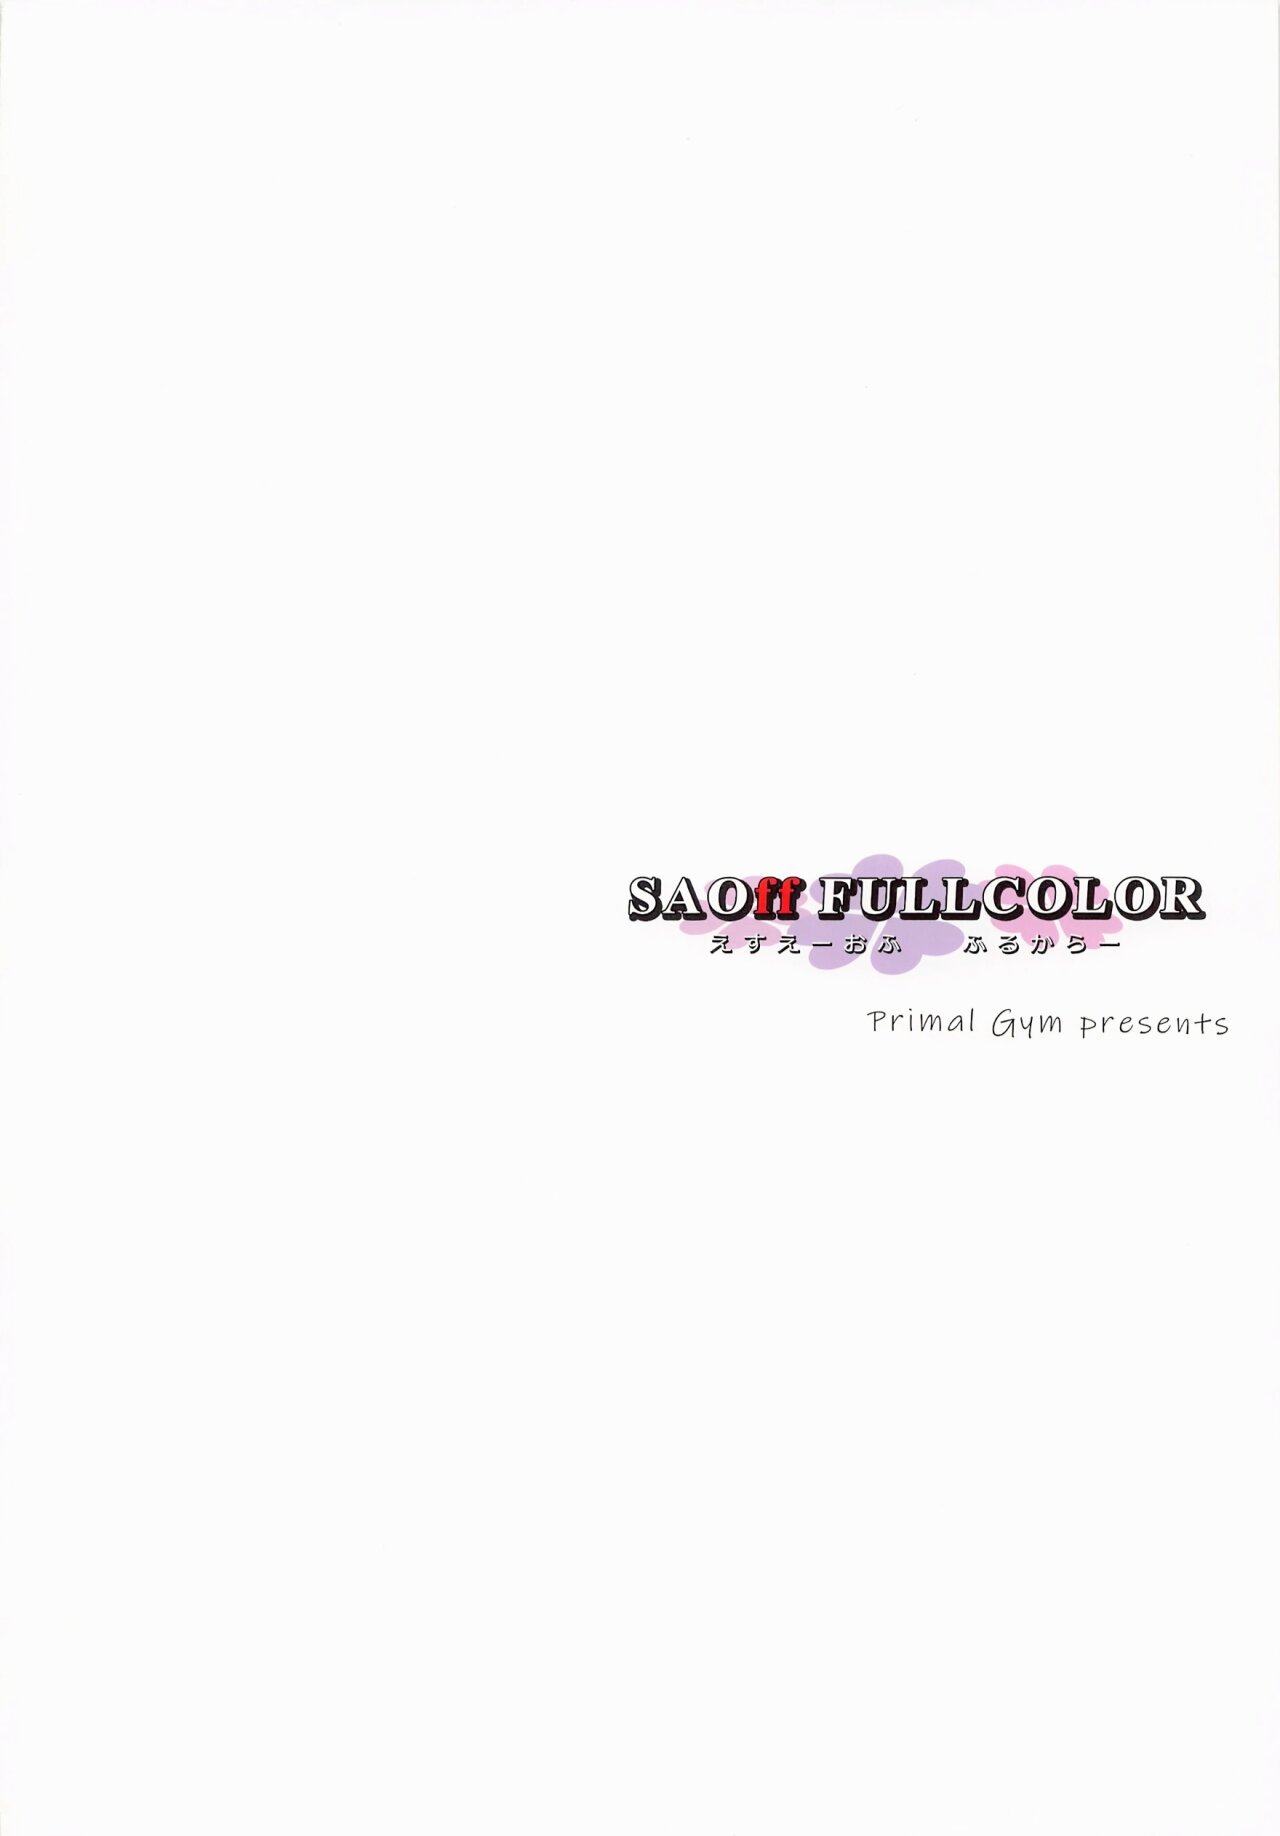 SAOff FULLCOLOR (Kawase Seiki) (Español) - 1